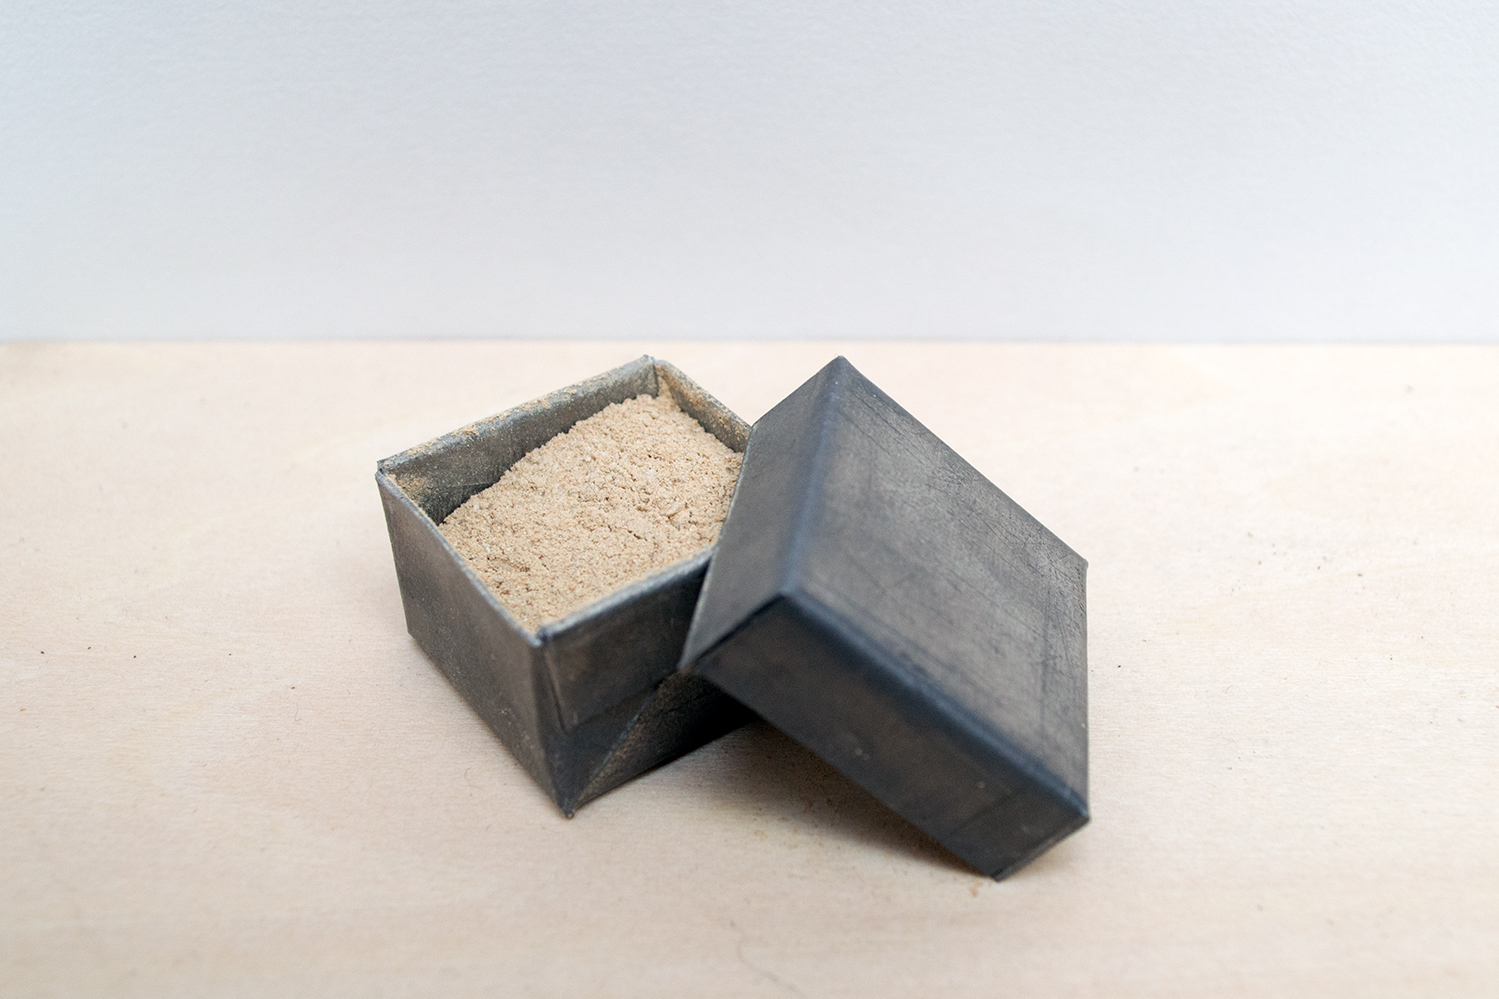 Metal box containing sand